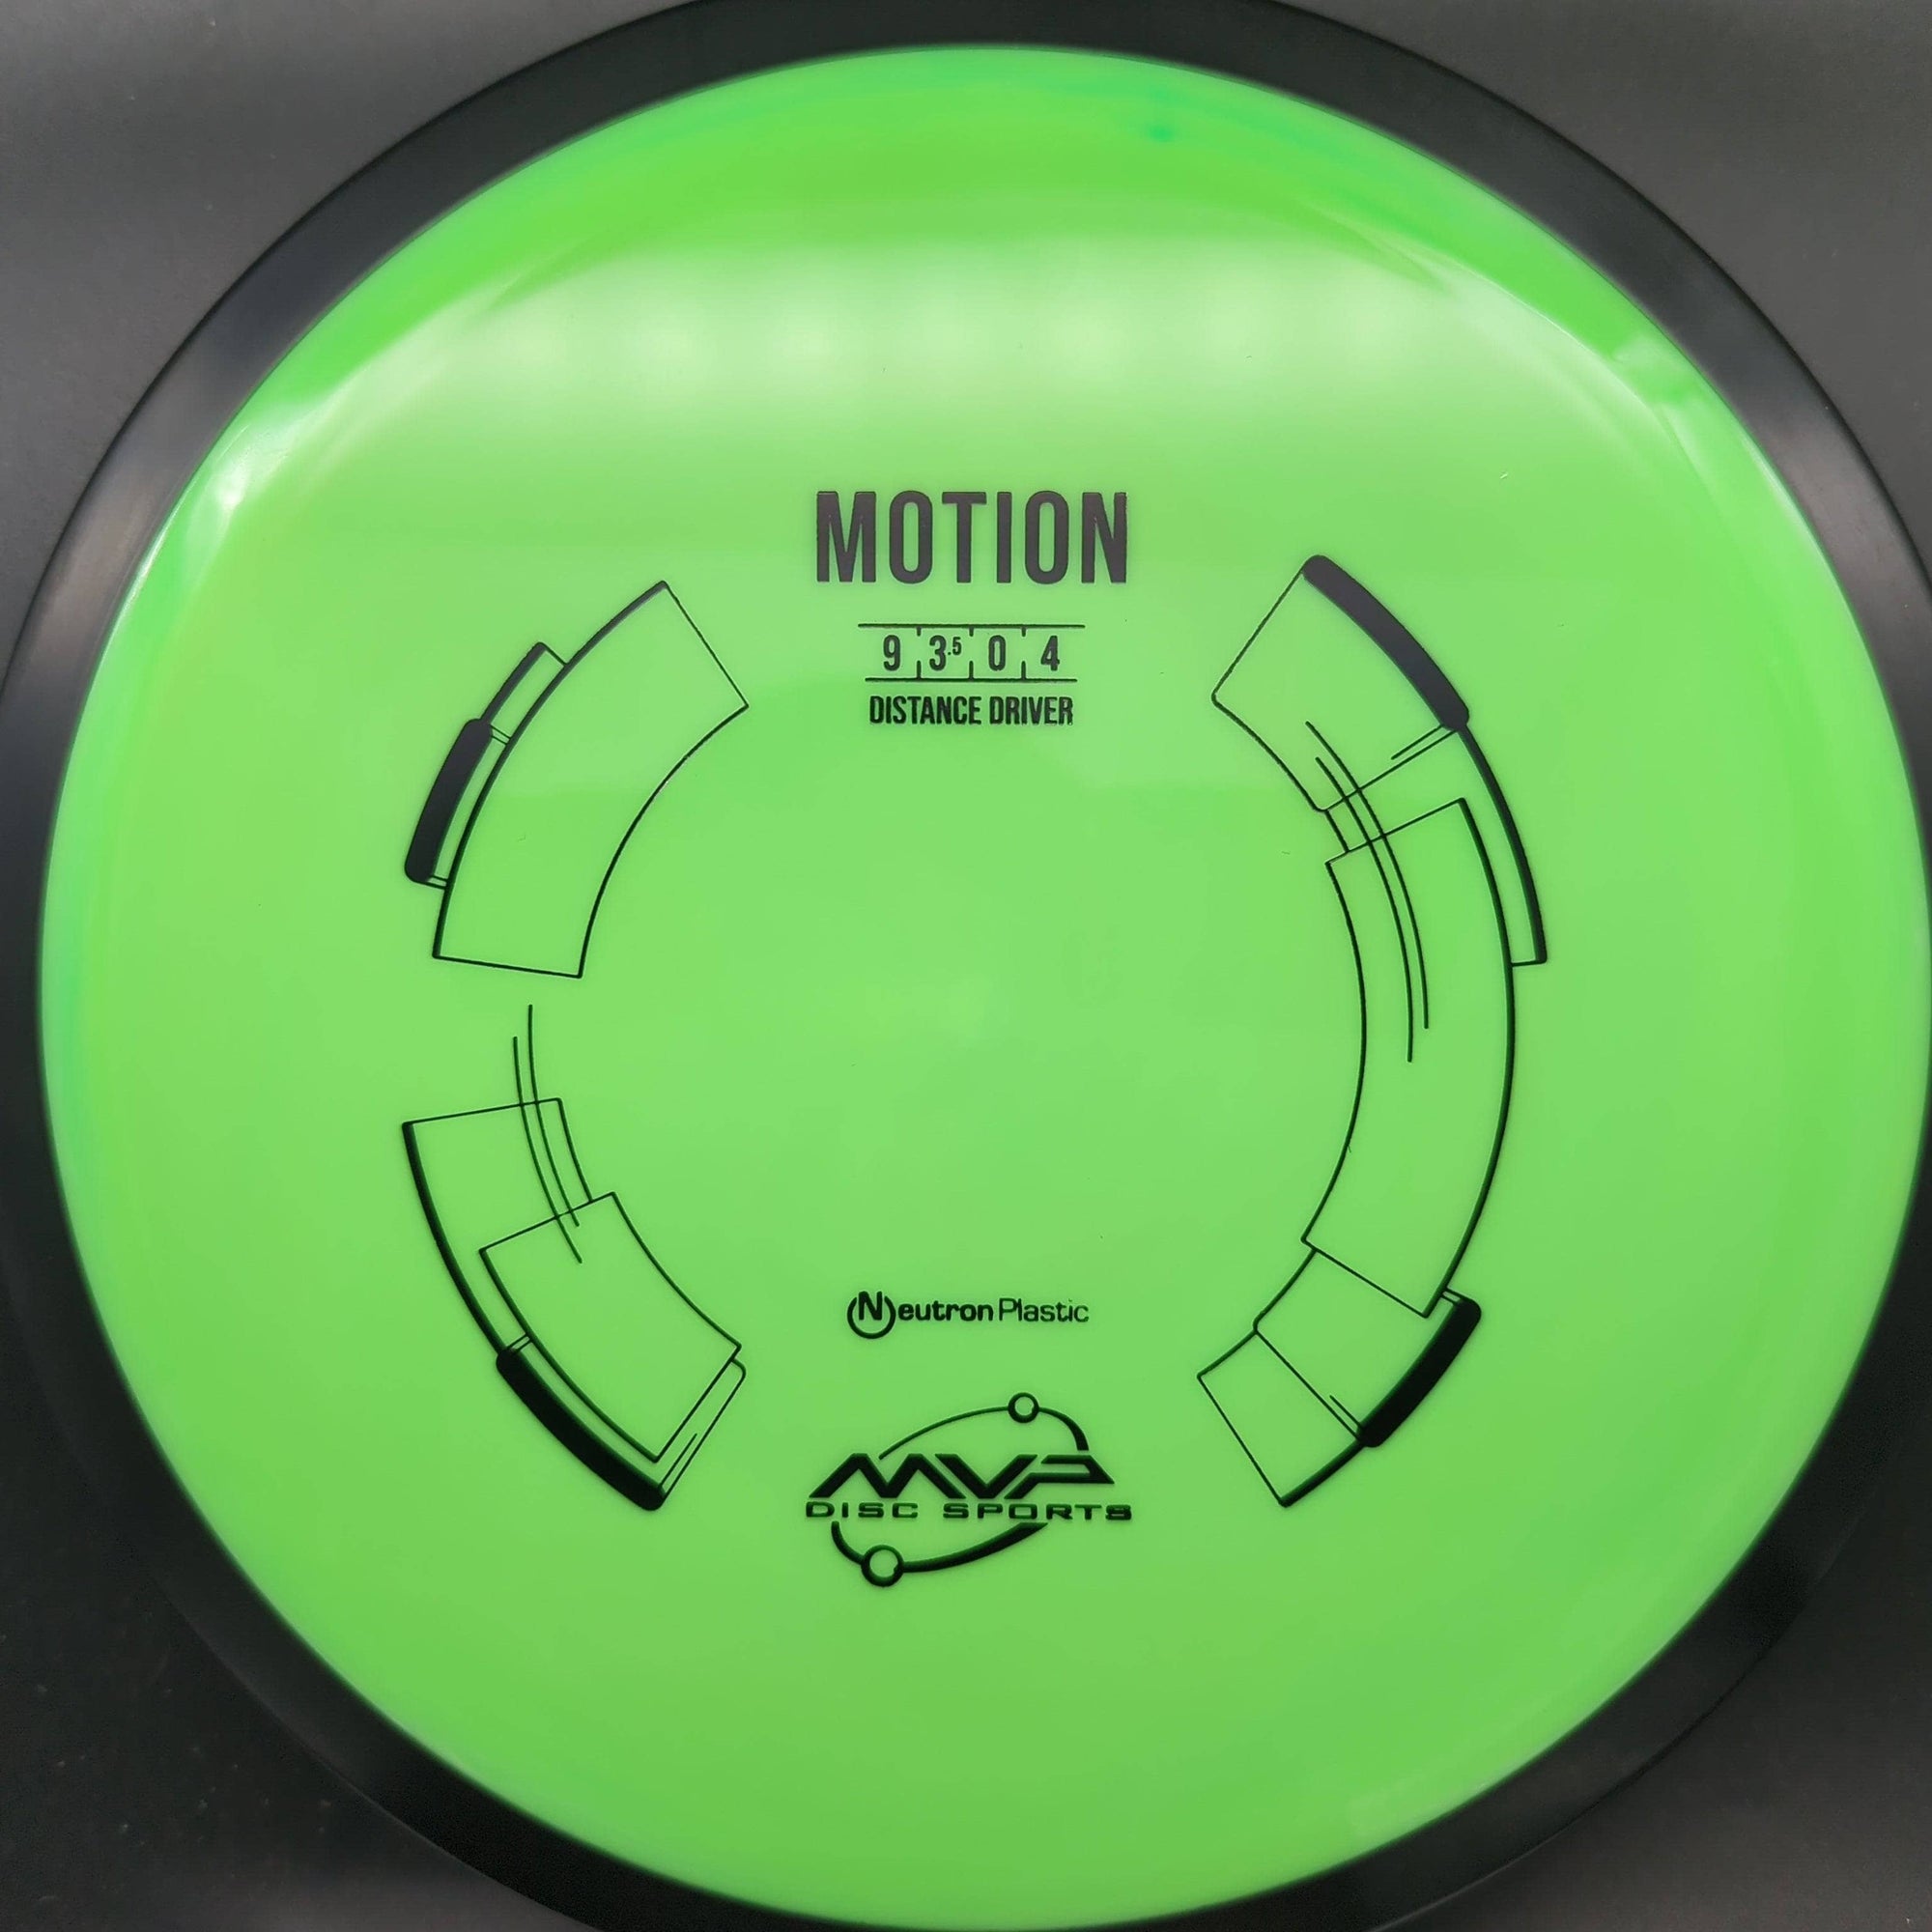 MVP Distance Driver Green 173g Motion, Neutron Plastic